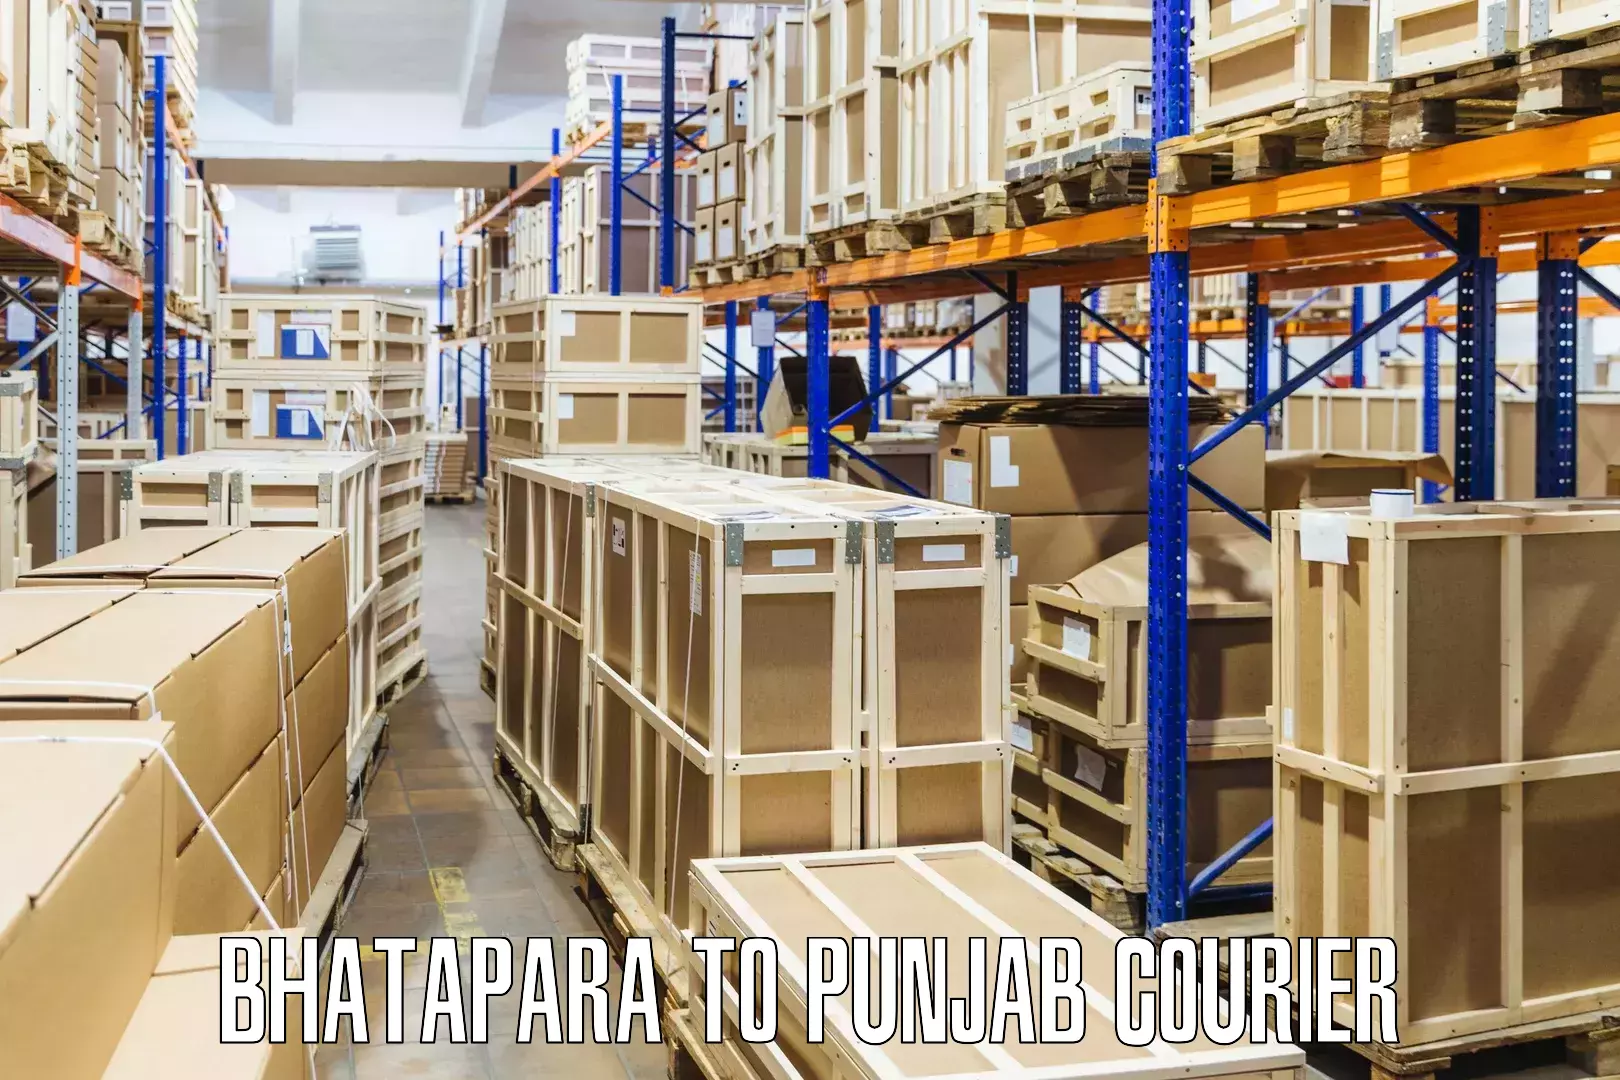 Courier service booking Bhatapara to Nawanshahr